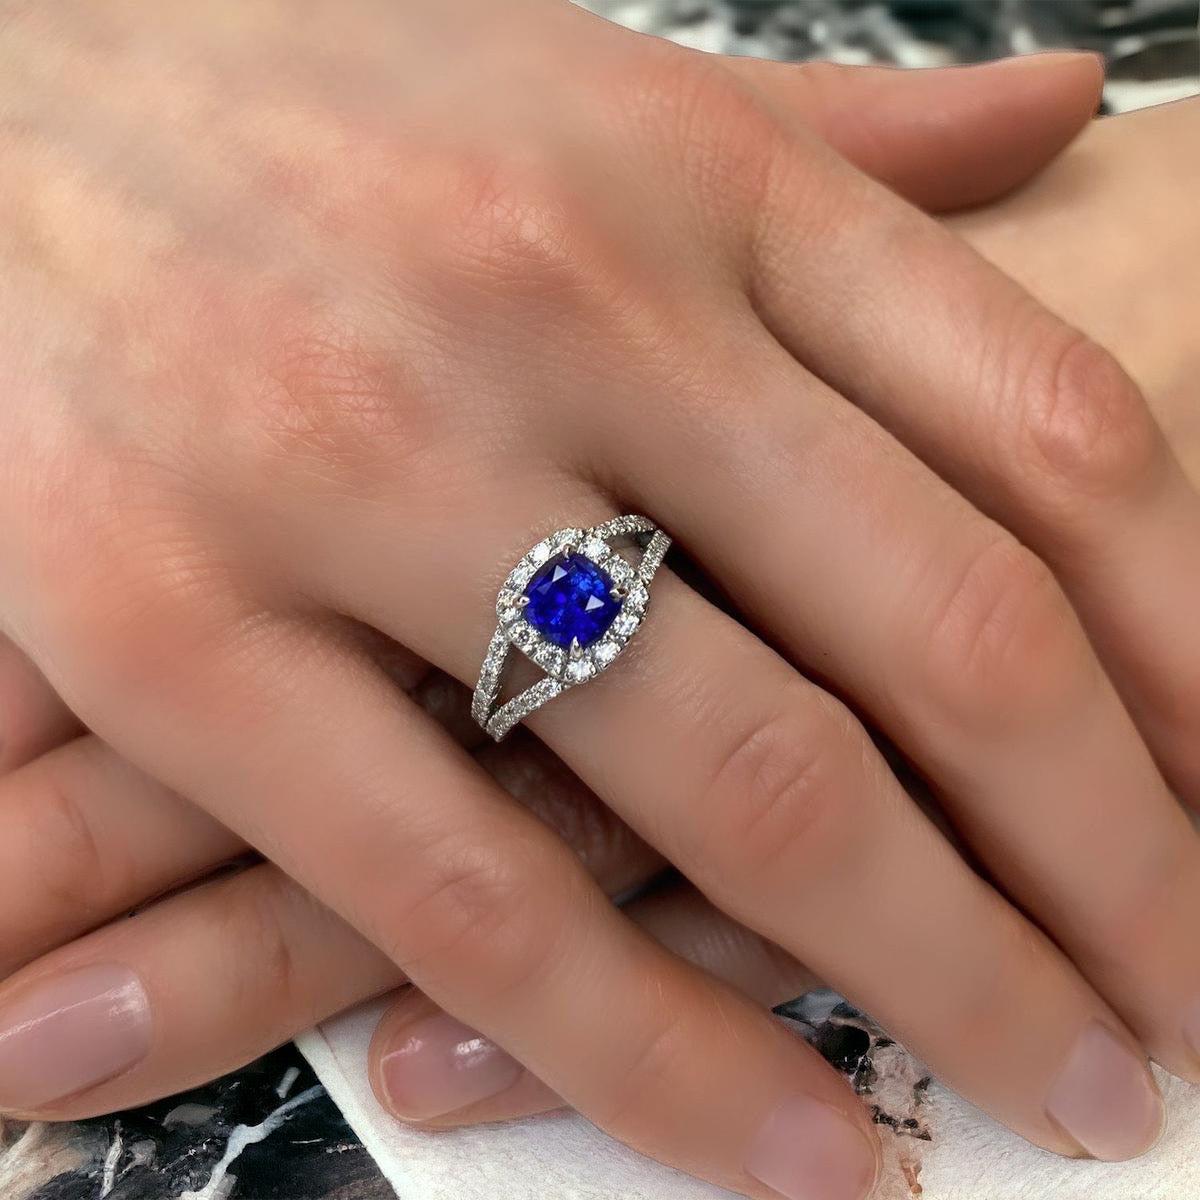 Handmade 18K white gold ring 2.64 ct. natural Royal blue Sapphire & natural Vvs1 quality Diamonds.